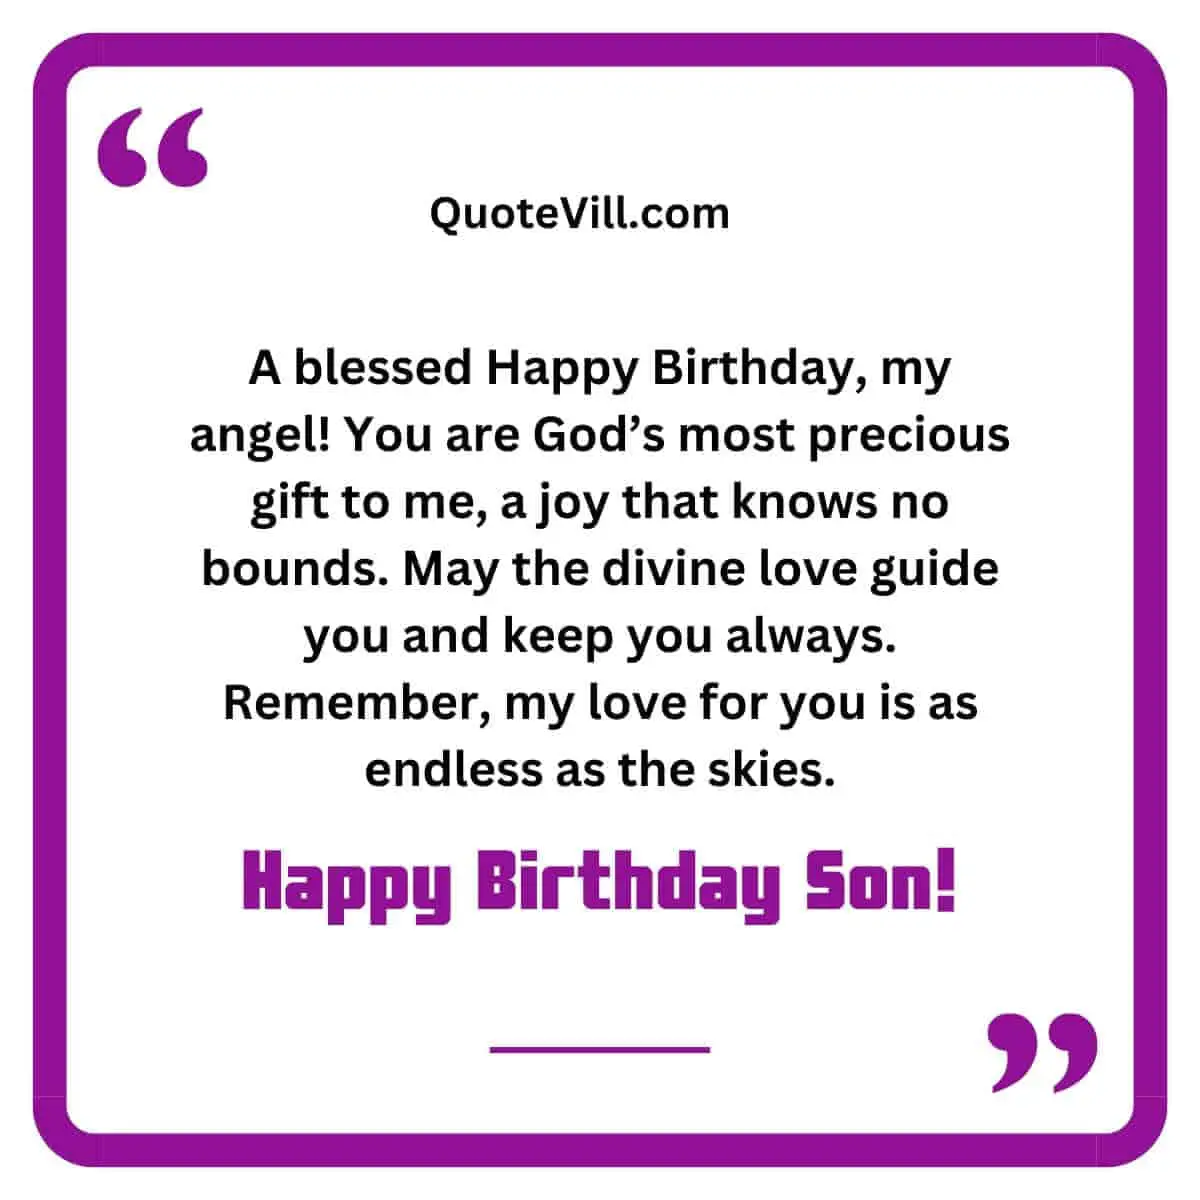 Heartfelt Happy Birthday Wishes for Son from Mom